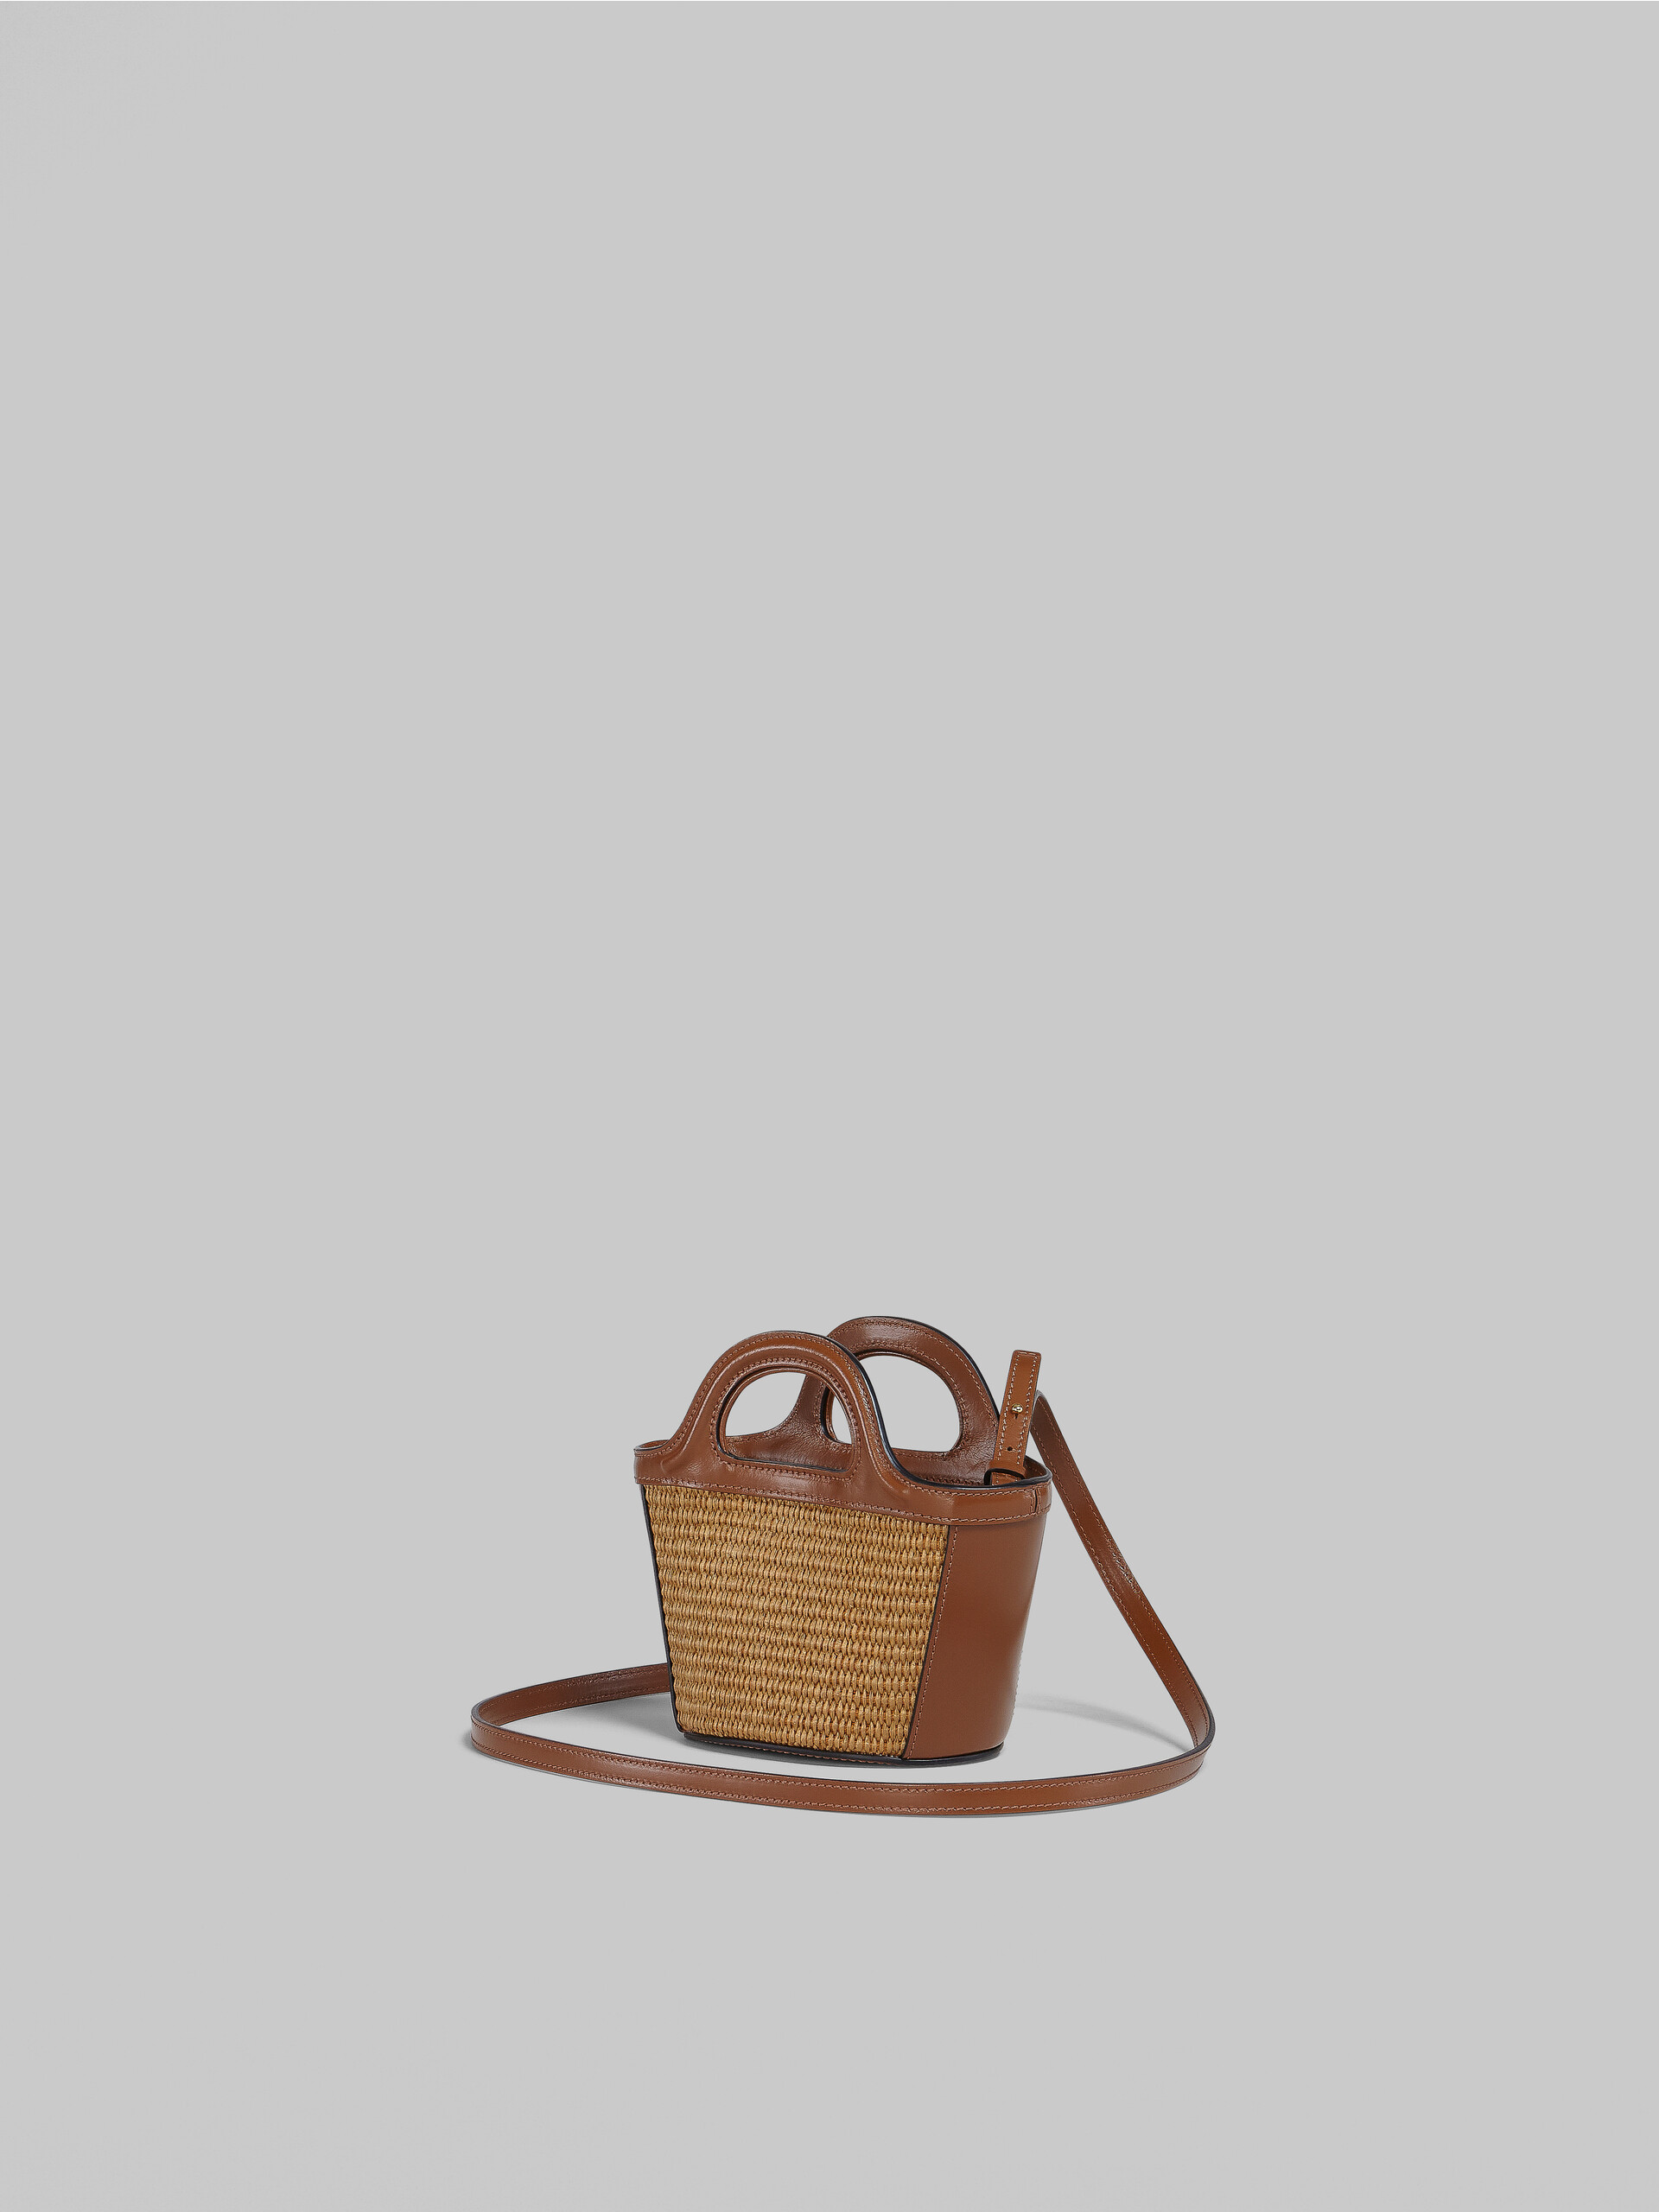 Tropicalia Micro Bag in brown leather and raffia - Handbags - Image 3